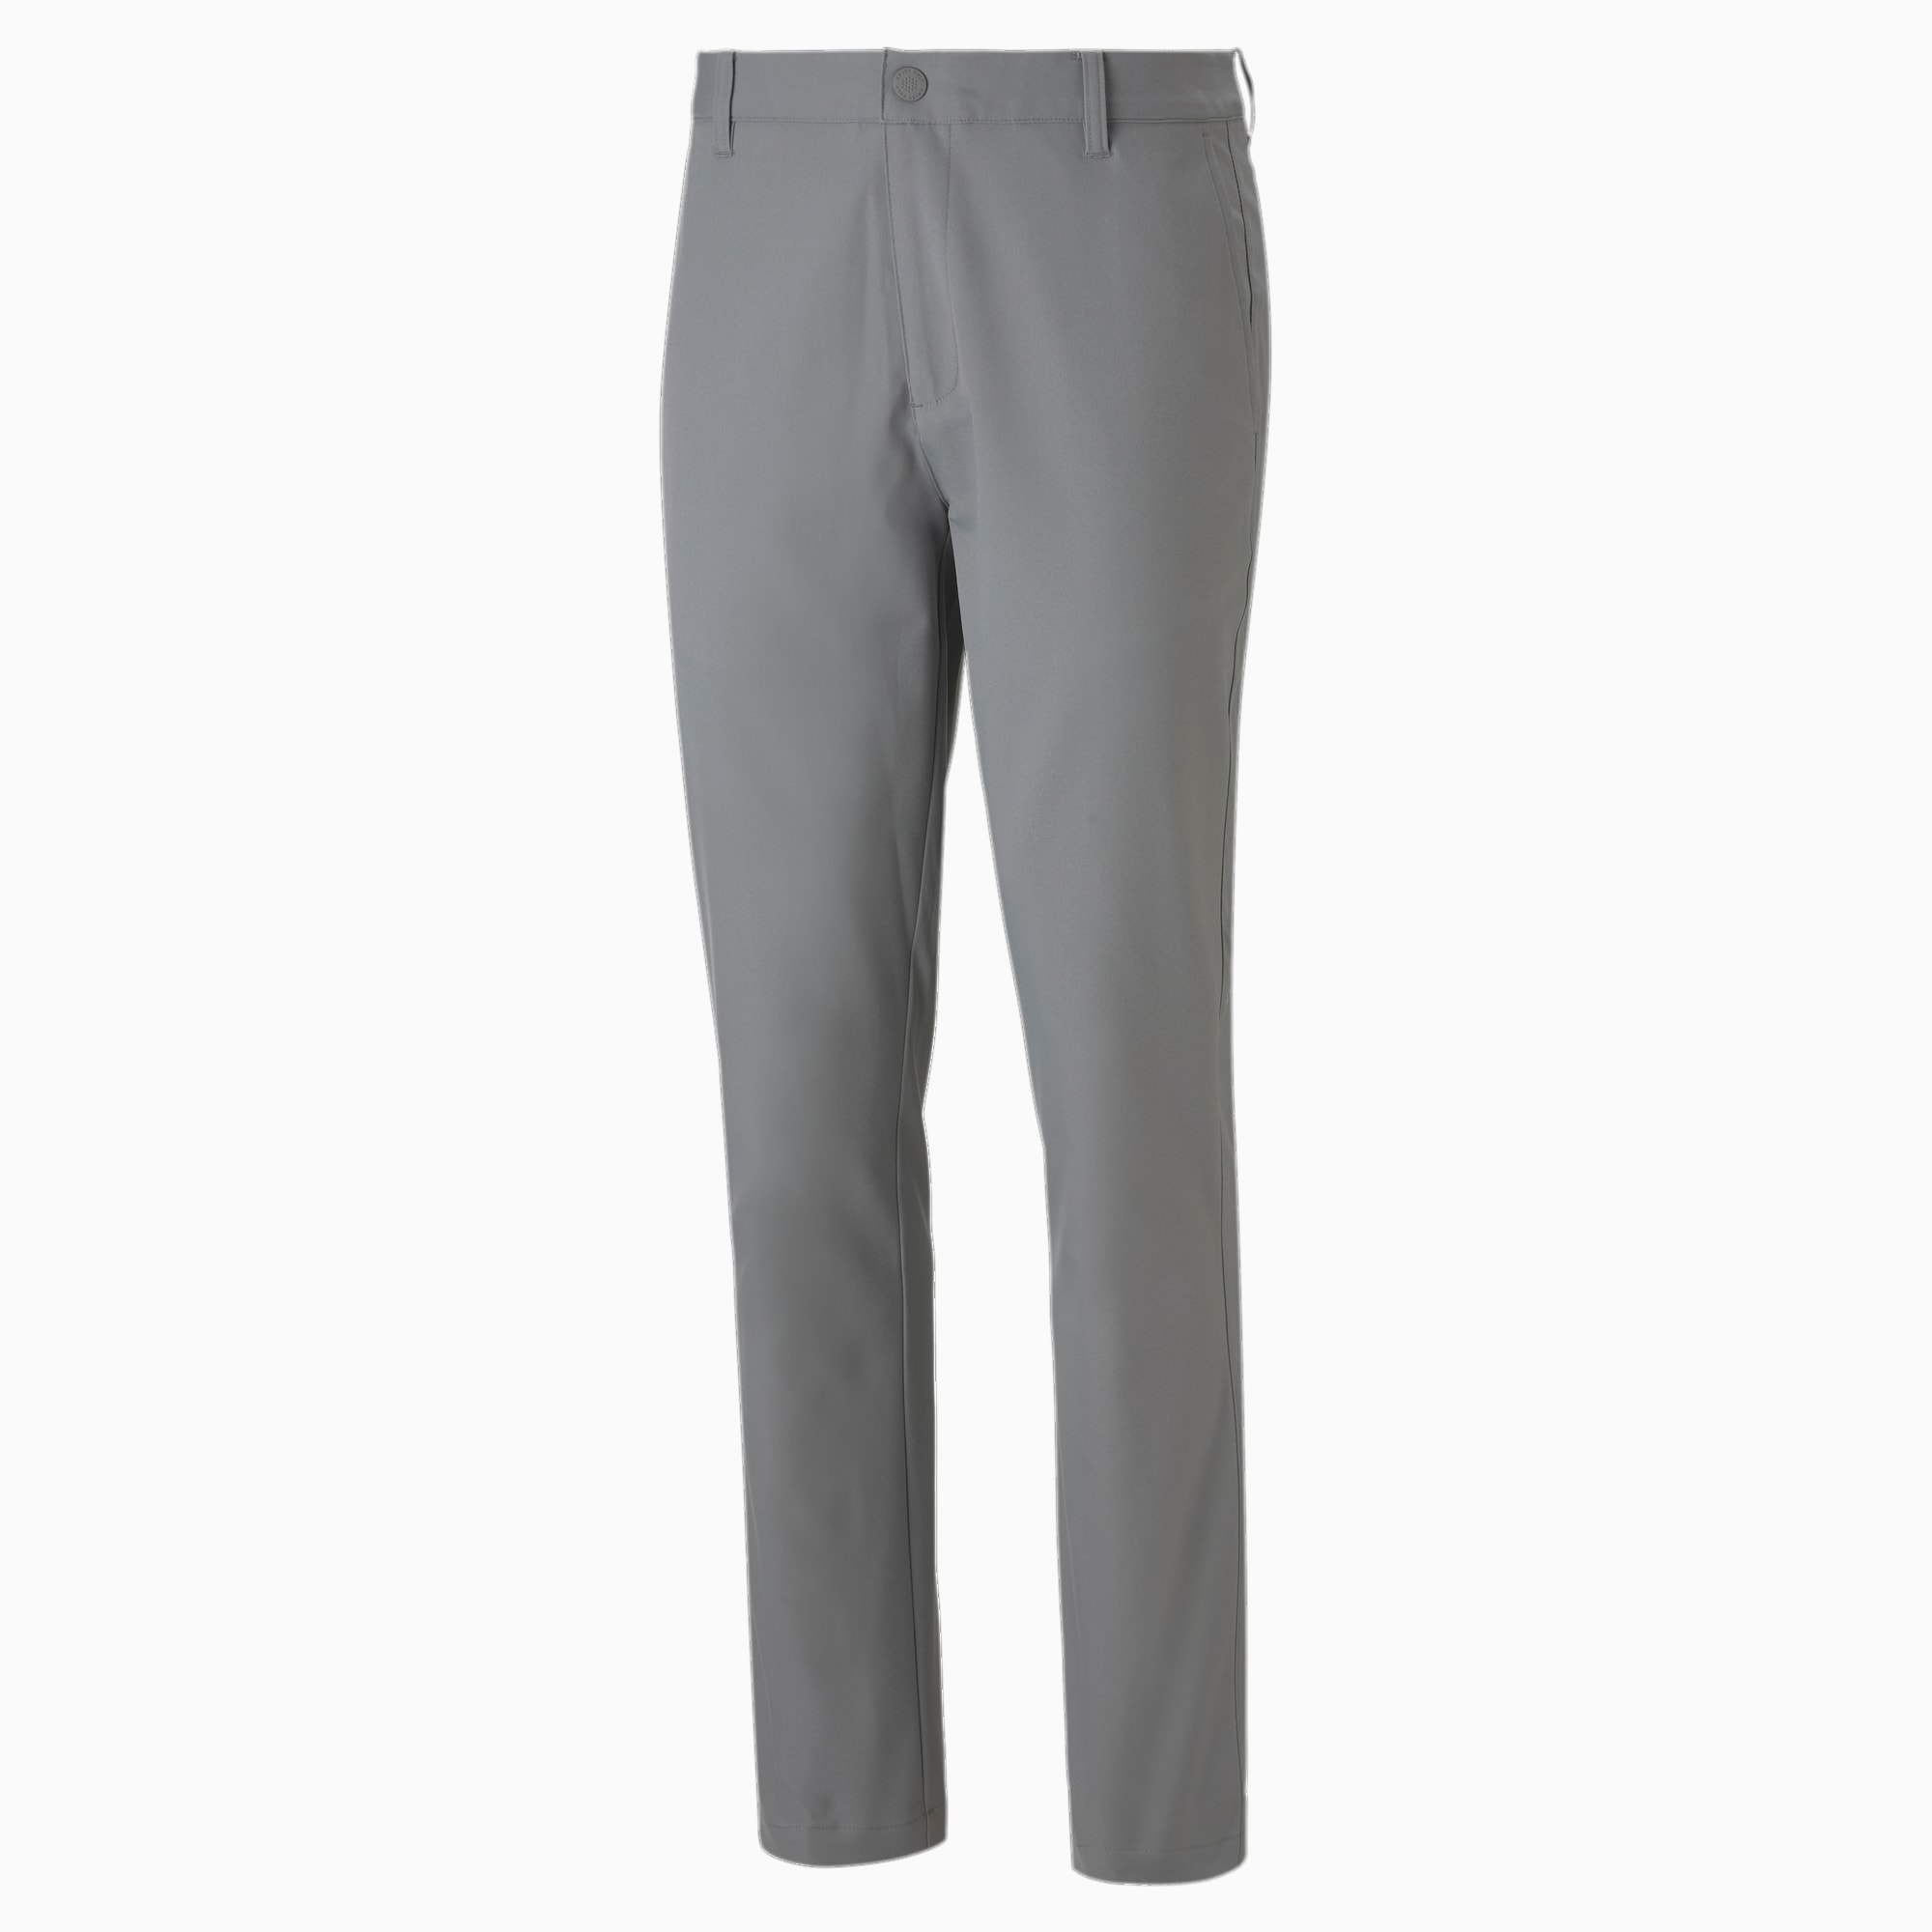 PUMA Dealer Tailored Golf Pants Men, Slate Sky, Size 38/32, Clothing